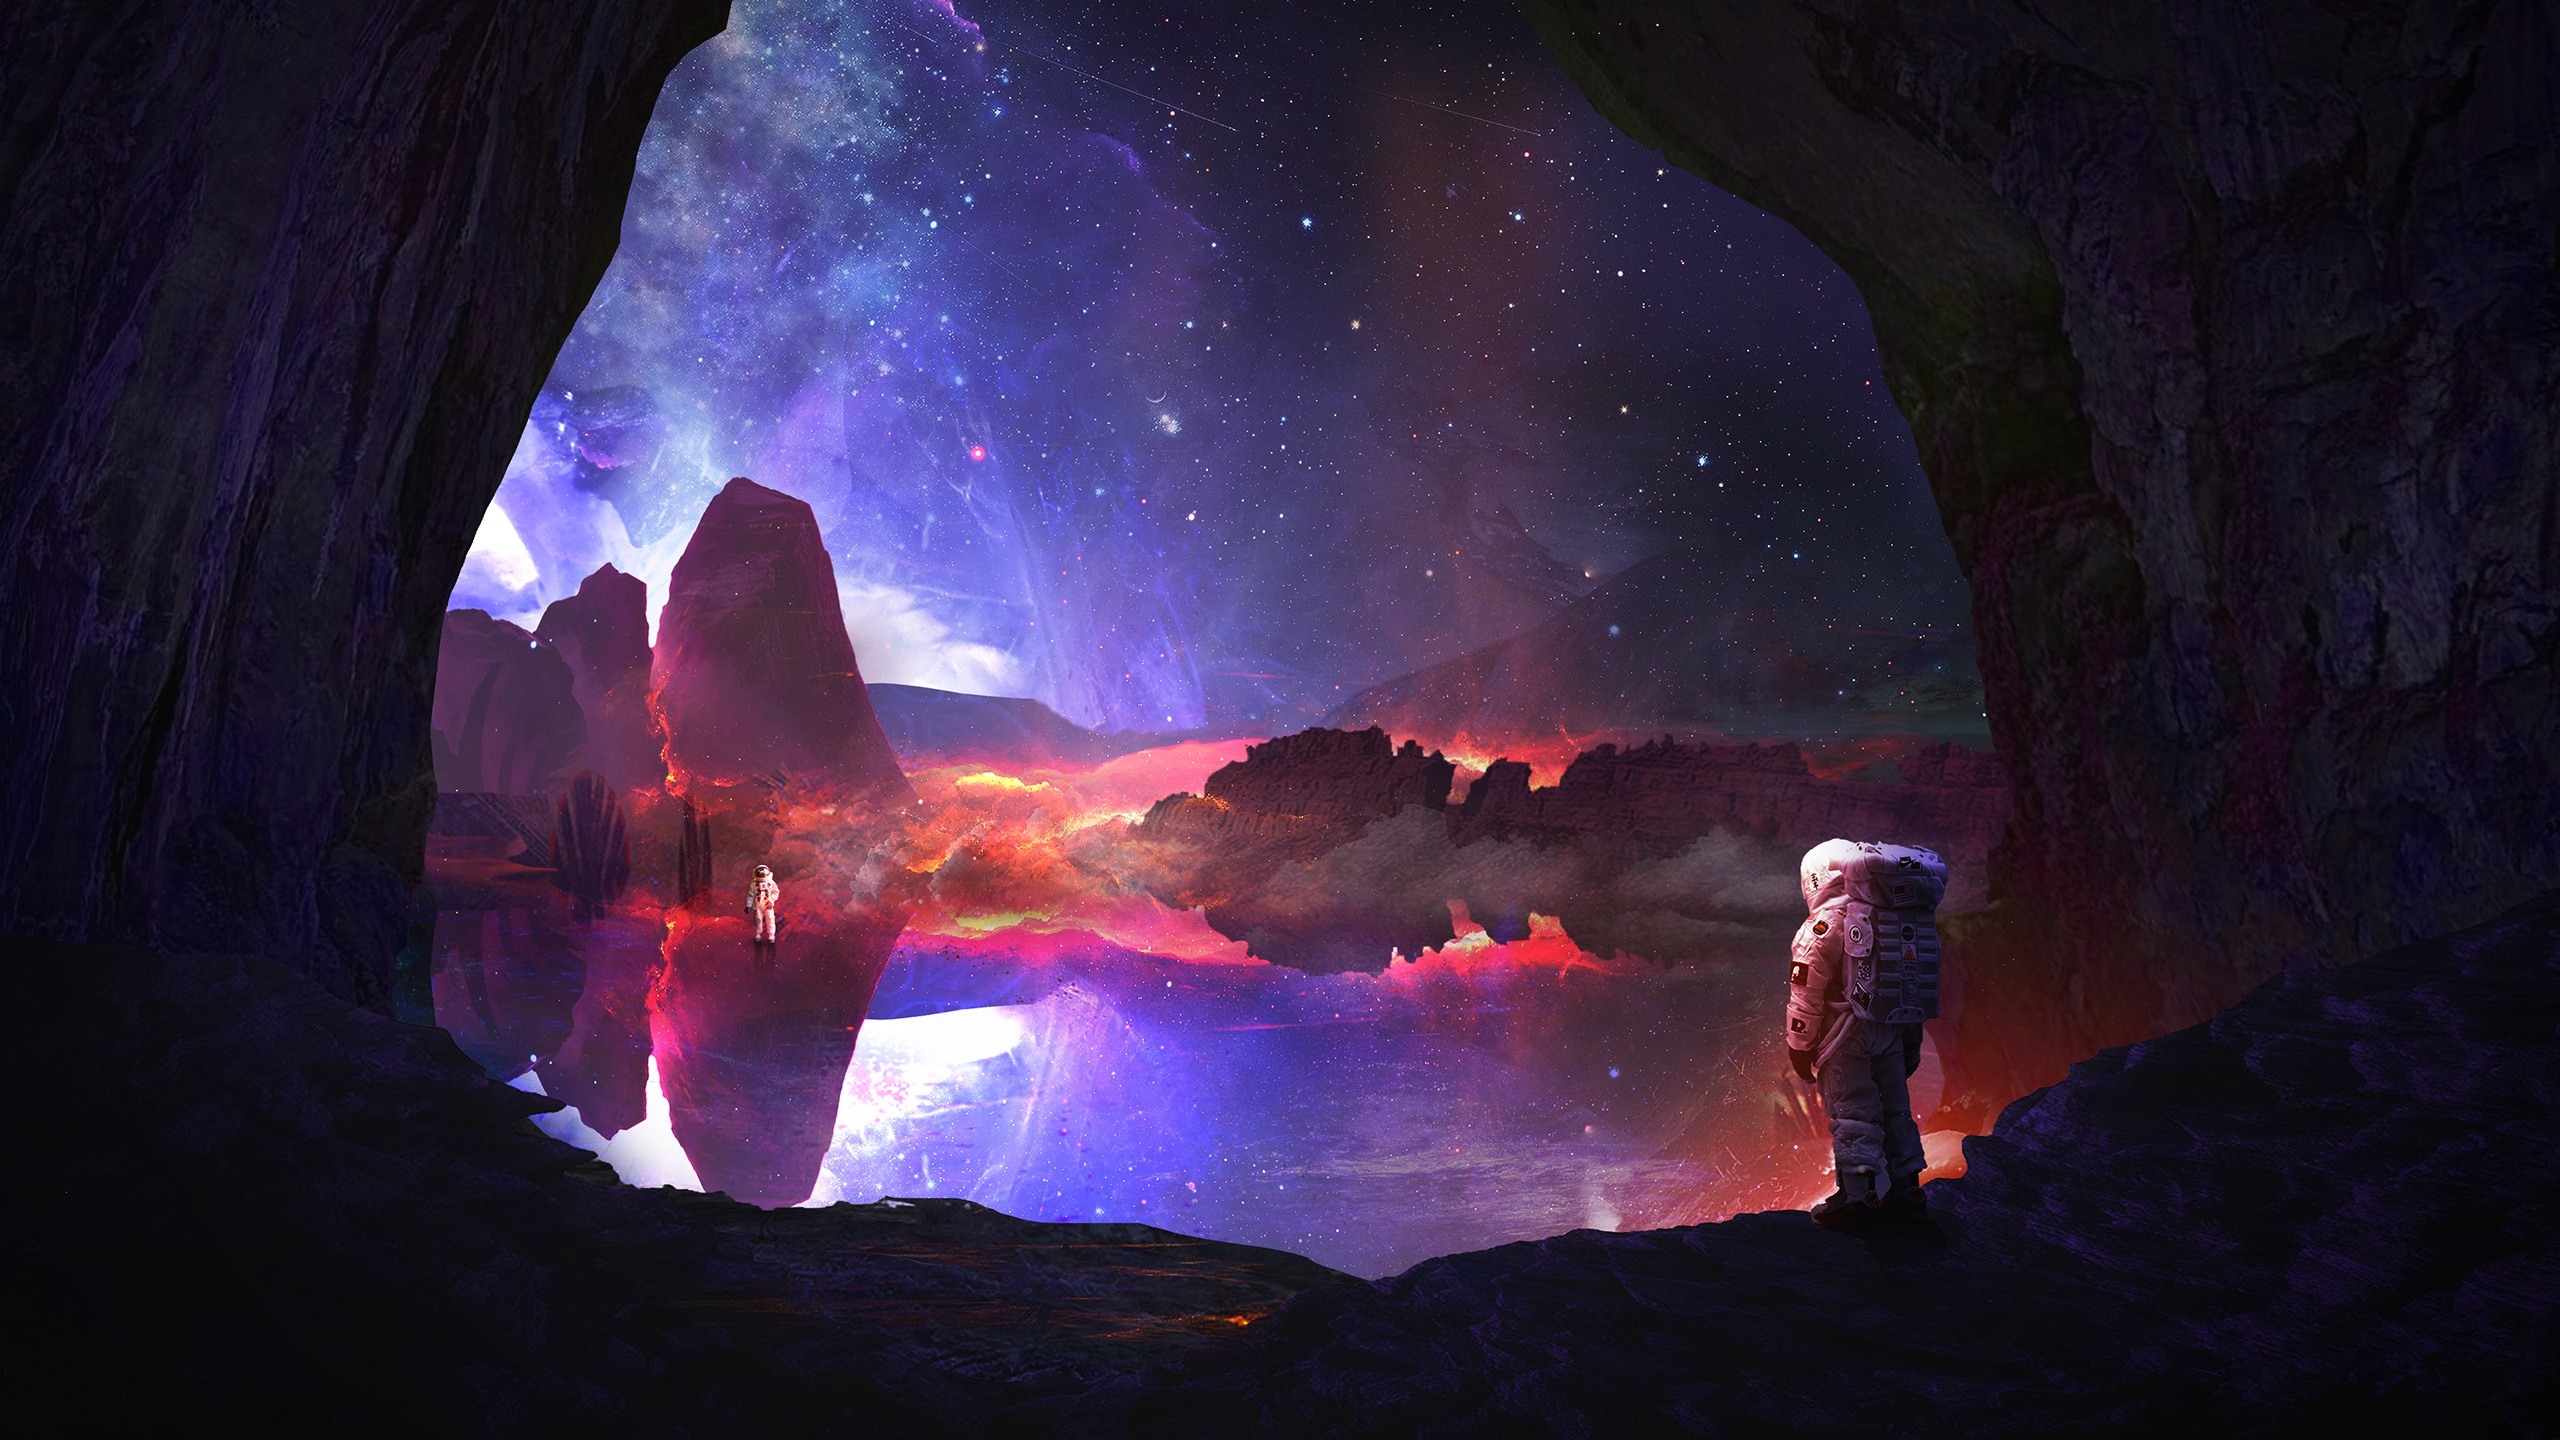 astronaut, sci fi, cave, lake, landscape, reflection, space suit, stars